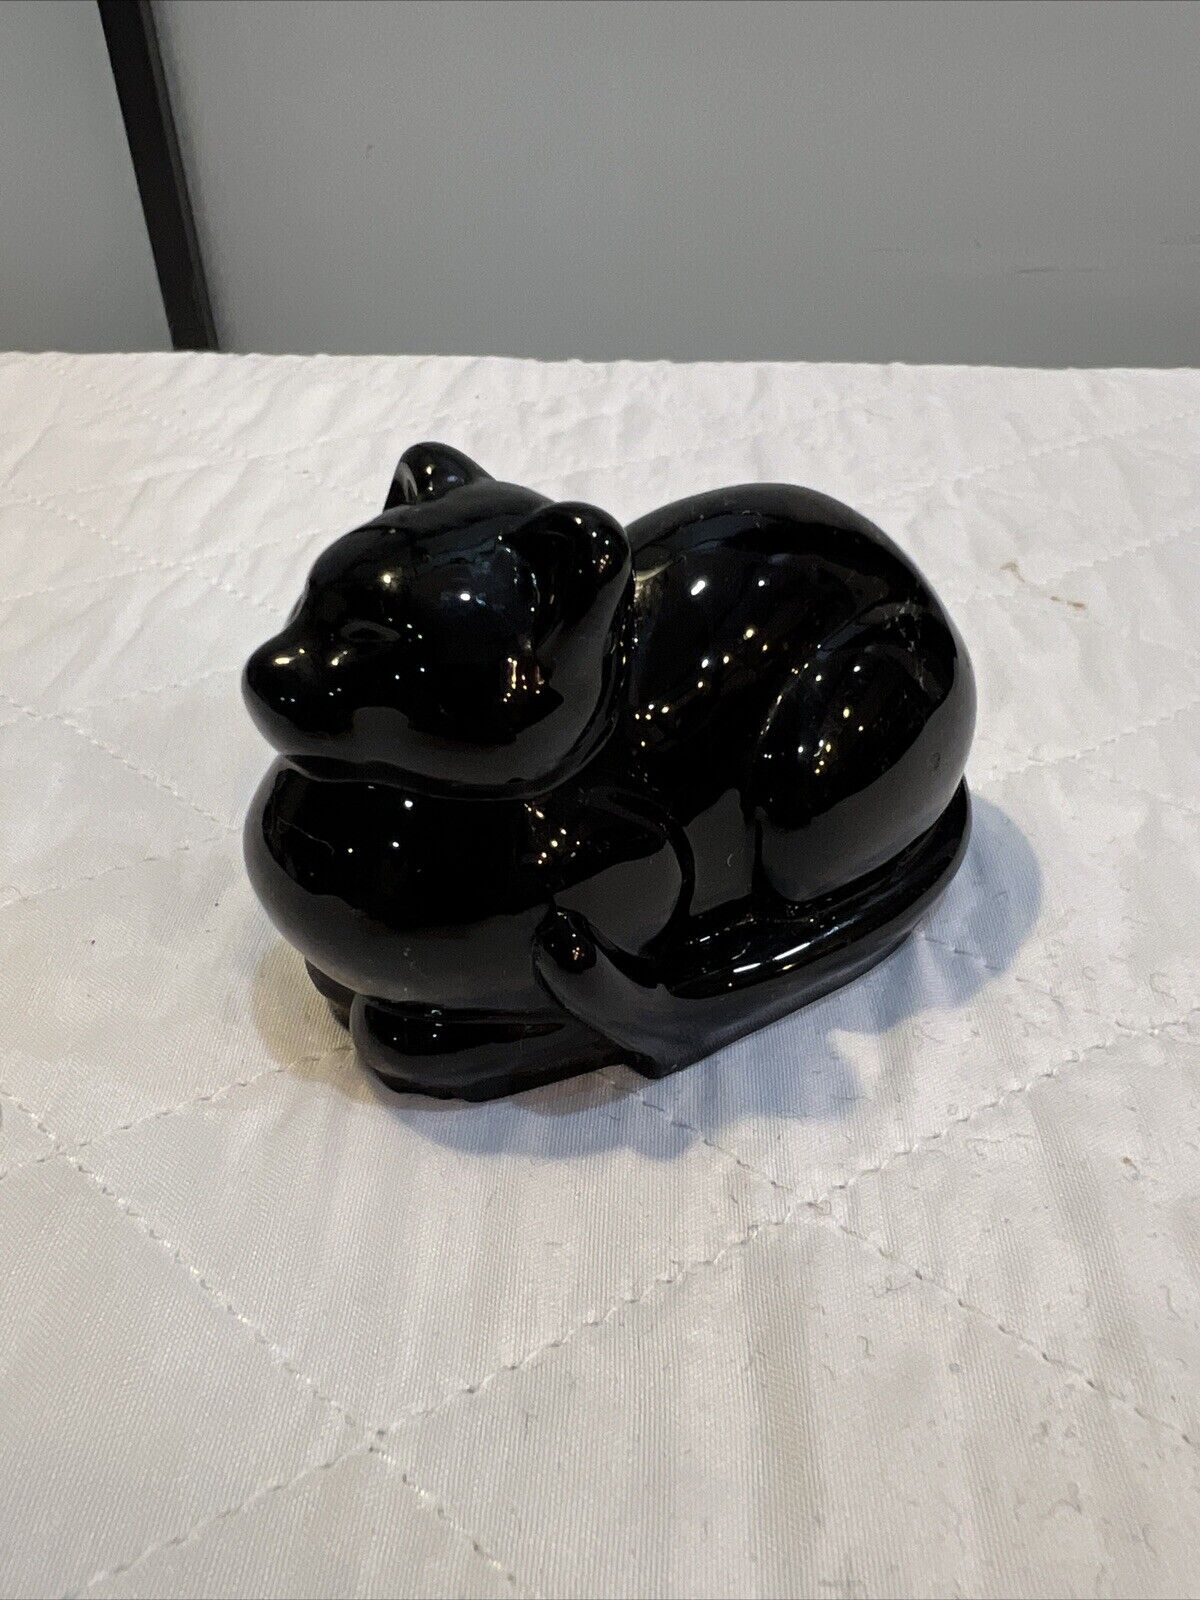 Vintage Black Art Glass Sitting Cat Figurine/Paperweight VERY NICE.